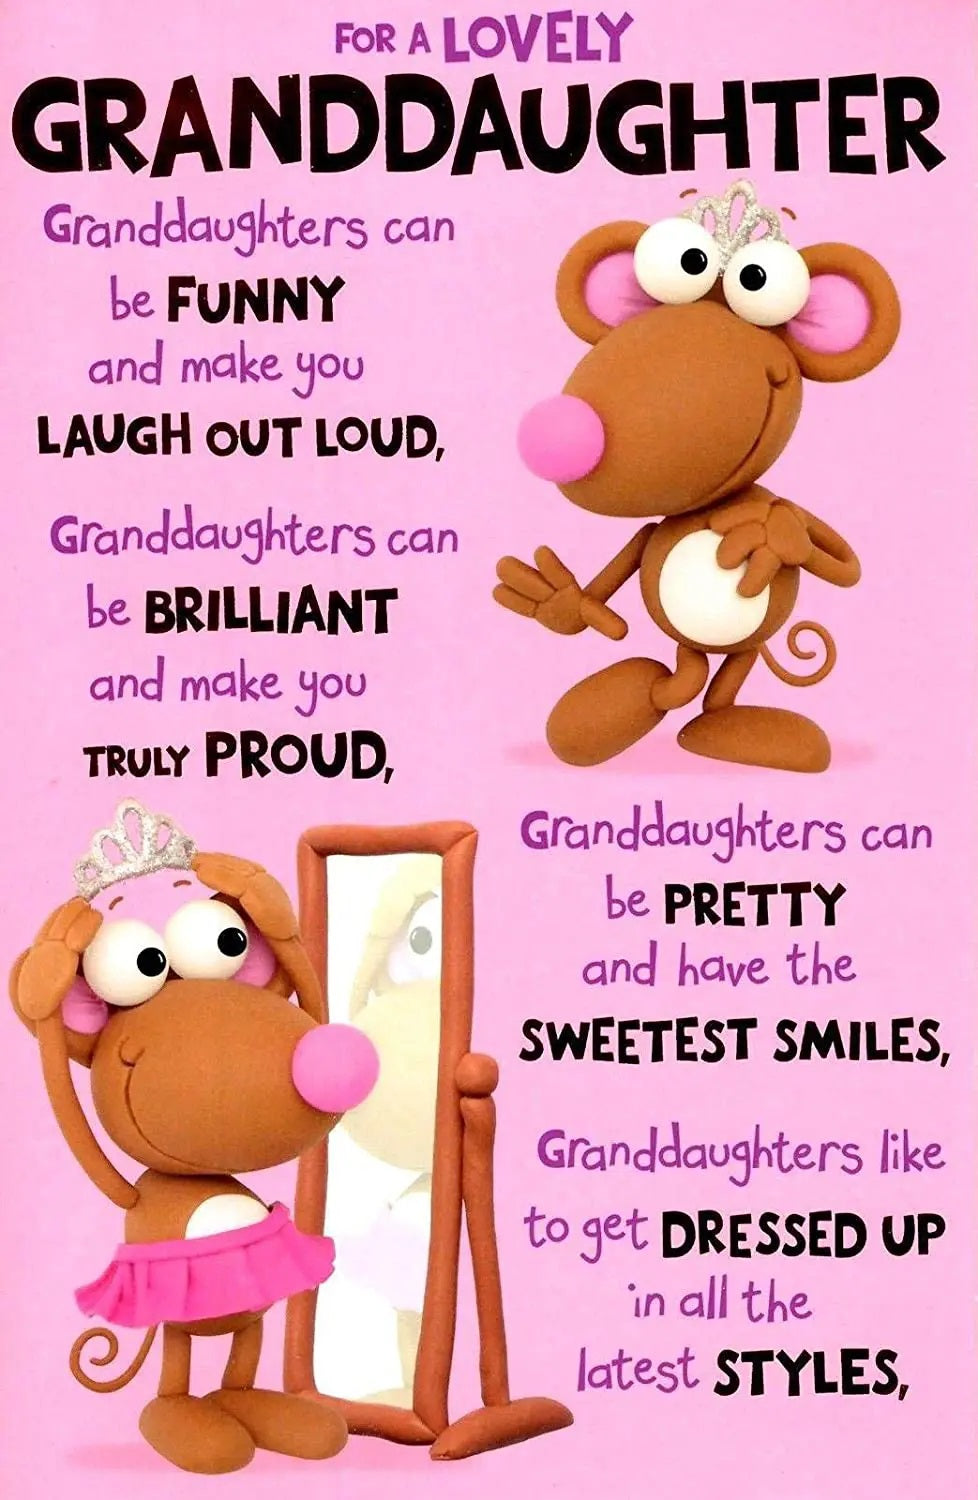 Granddaughter Birthday Card - Stylish Funny Princess Style